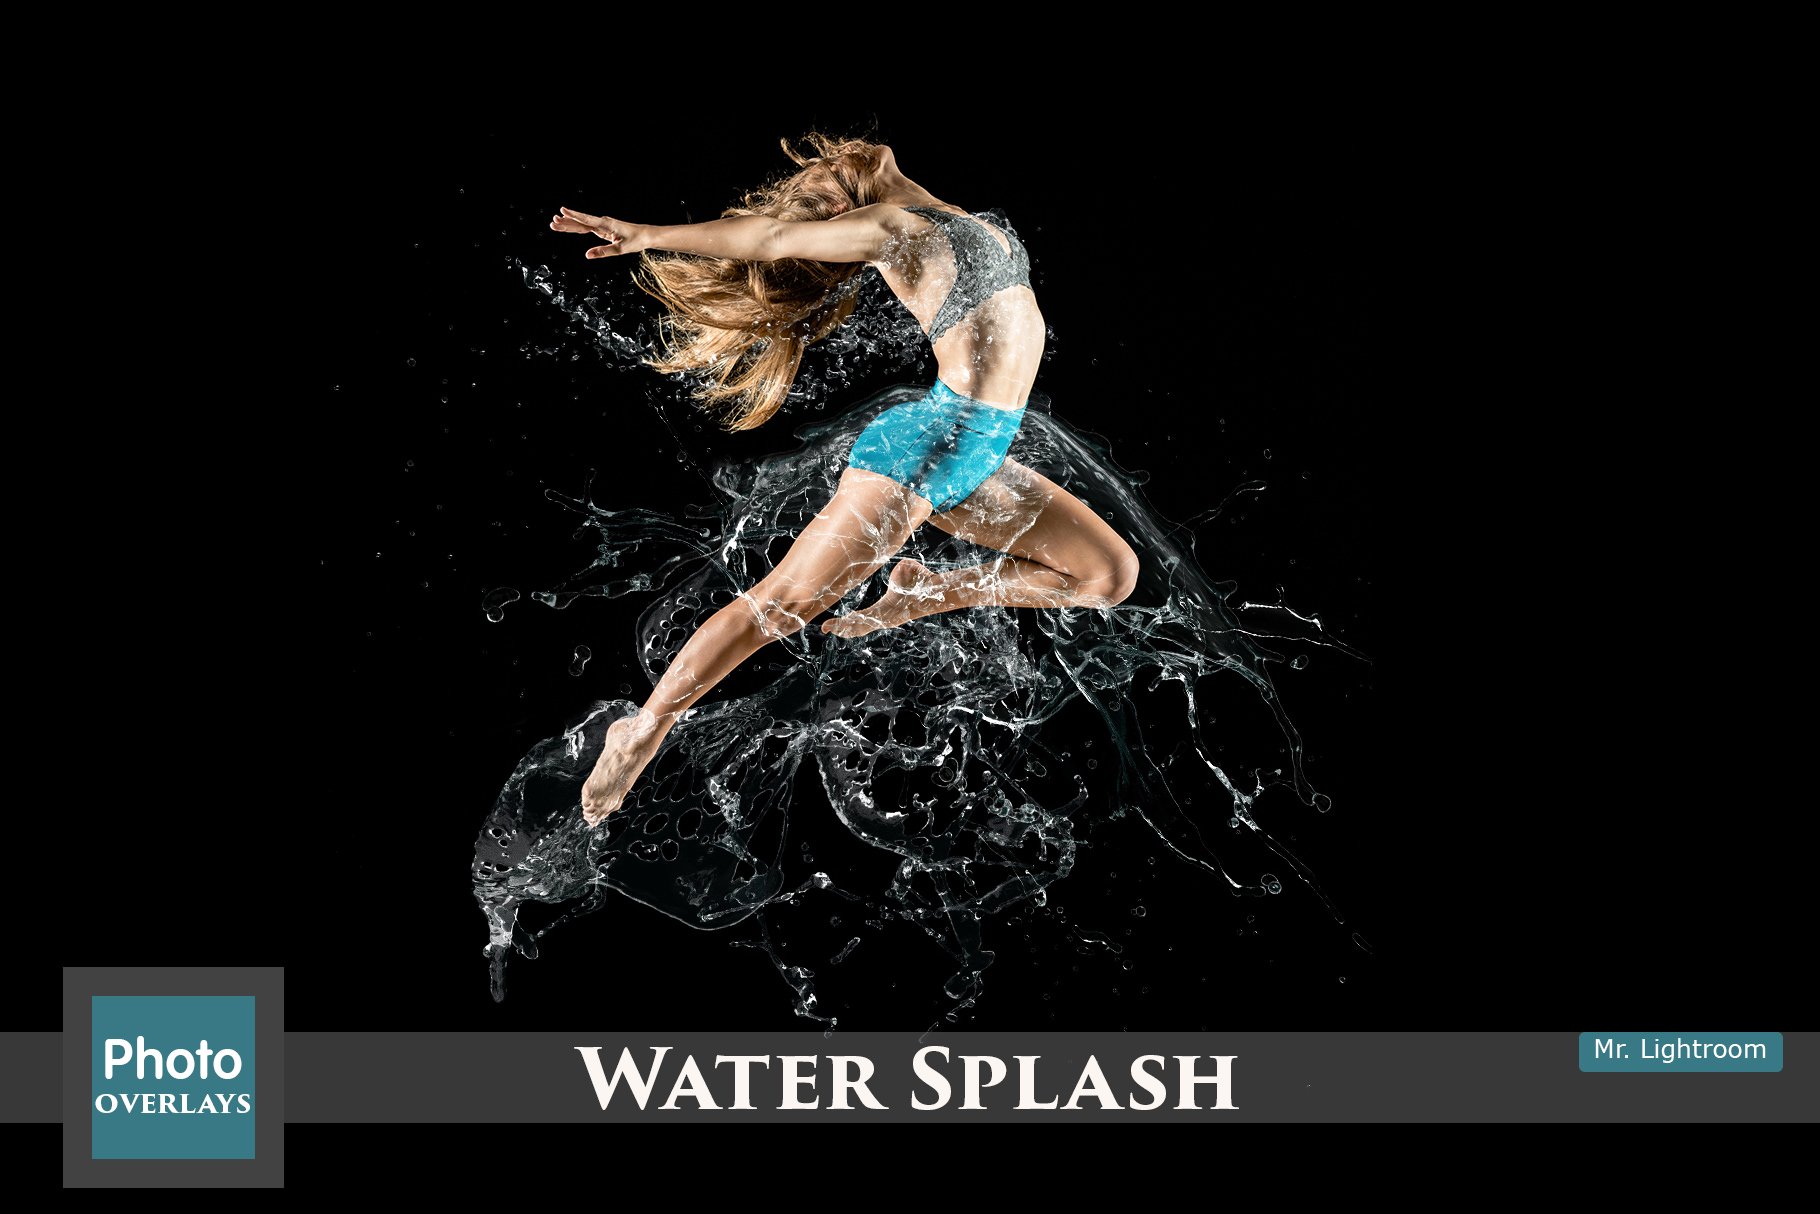 130 Water Splash Photo Overlayscover image.